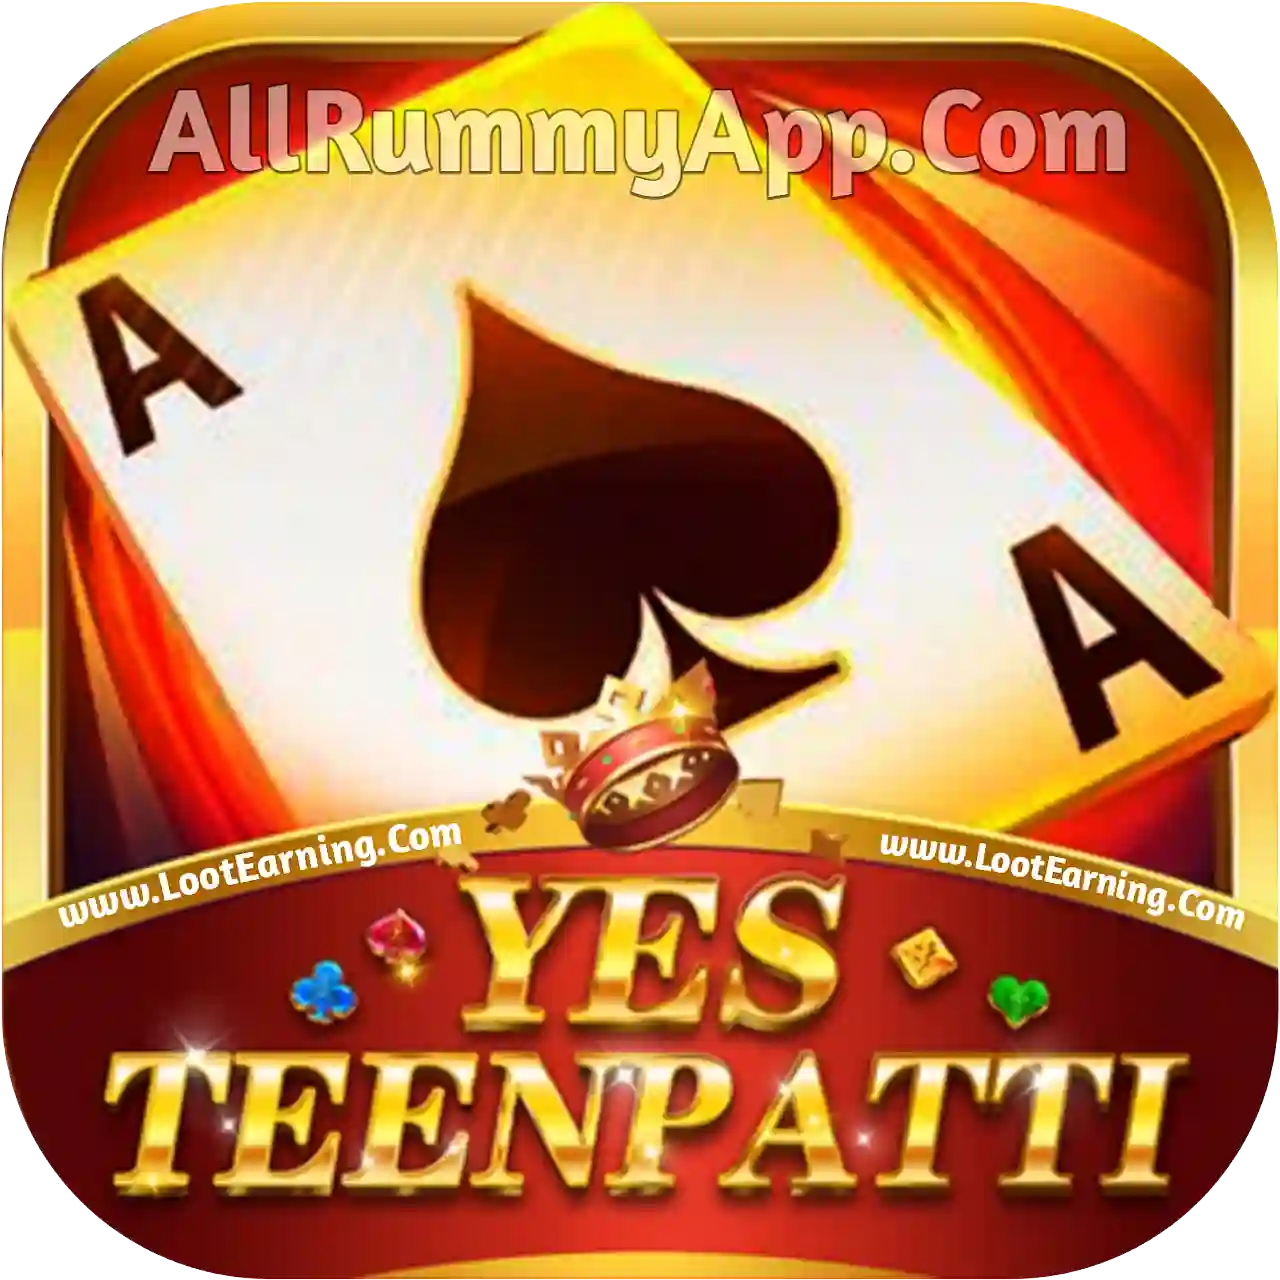 Teen Patti Yes APK -  Rummy App